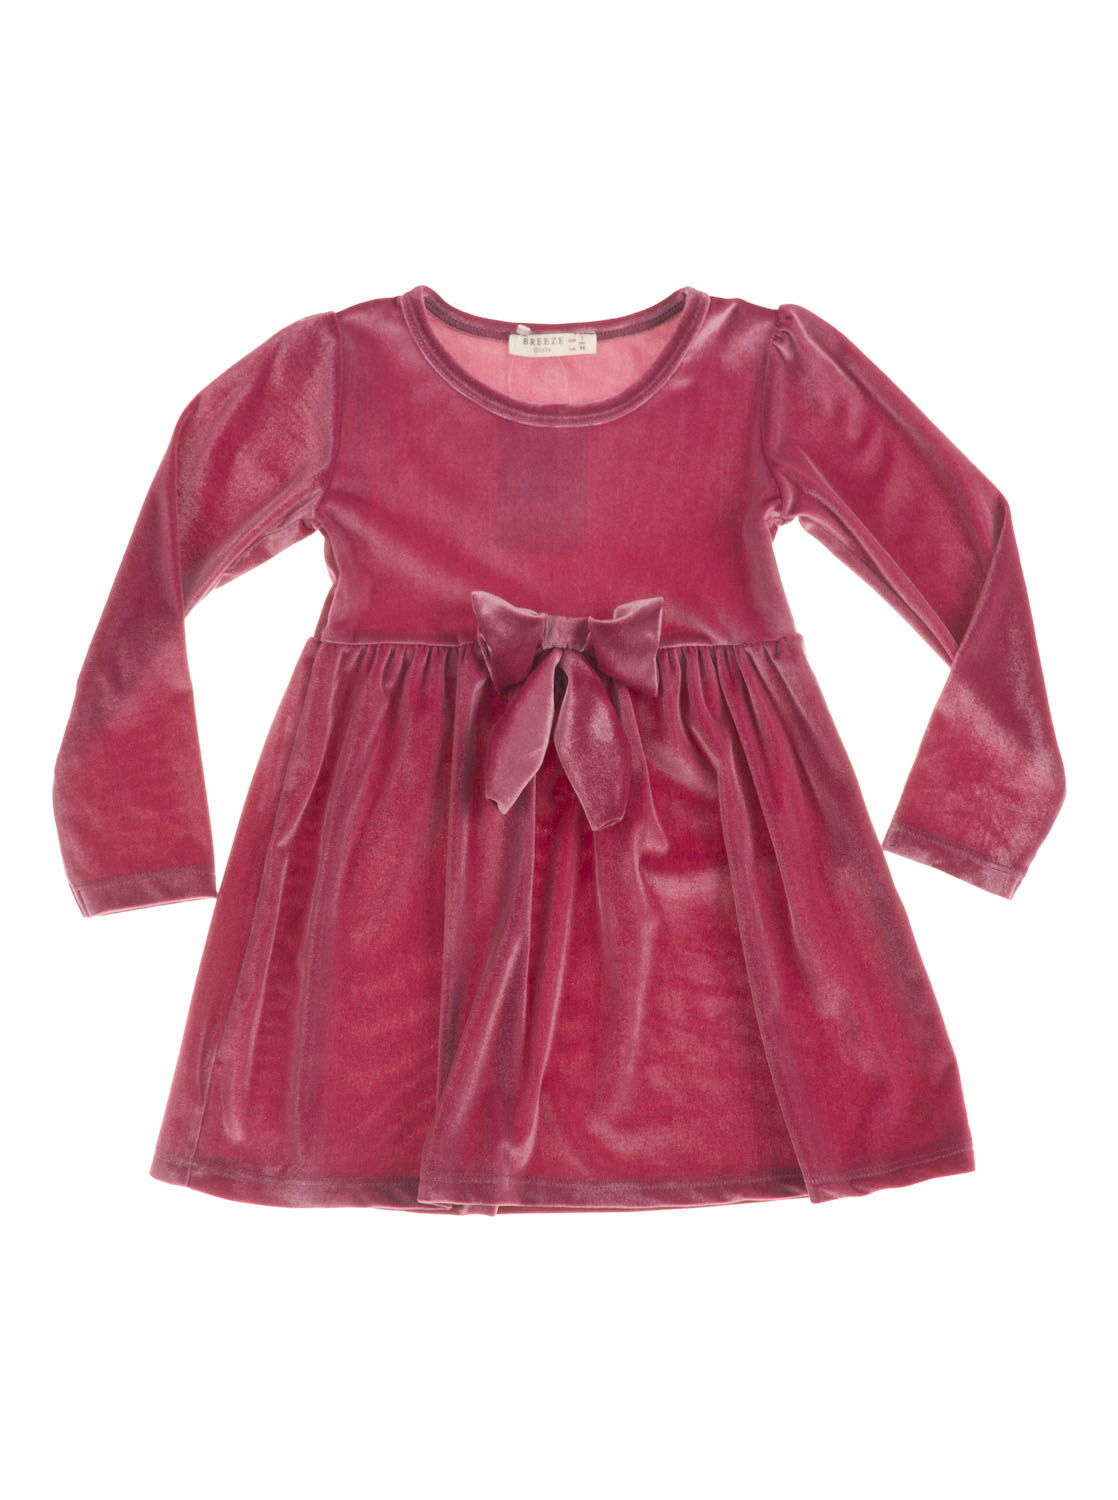 Платье нарядное для девочки Breeze розовое 10619 - цена